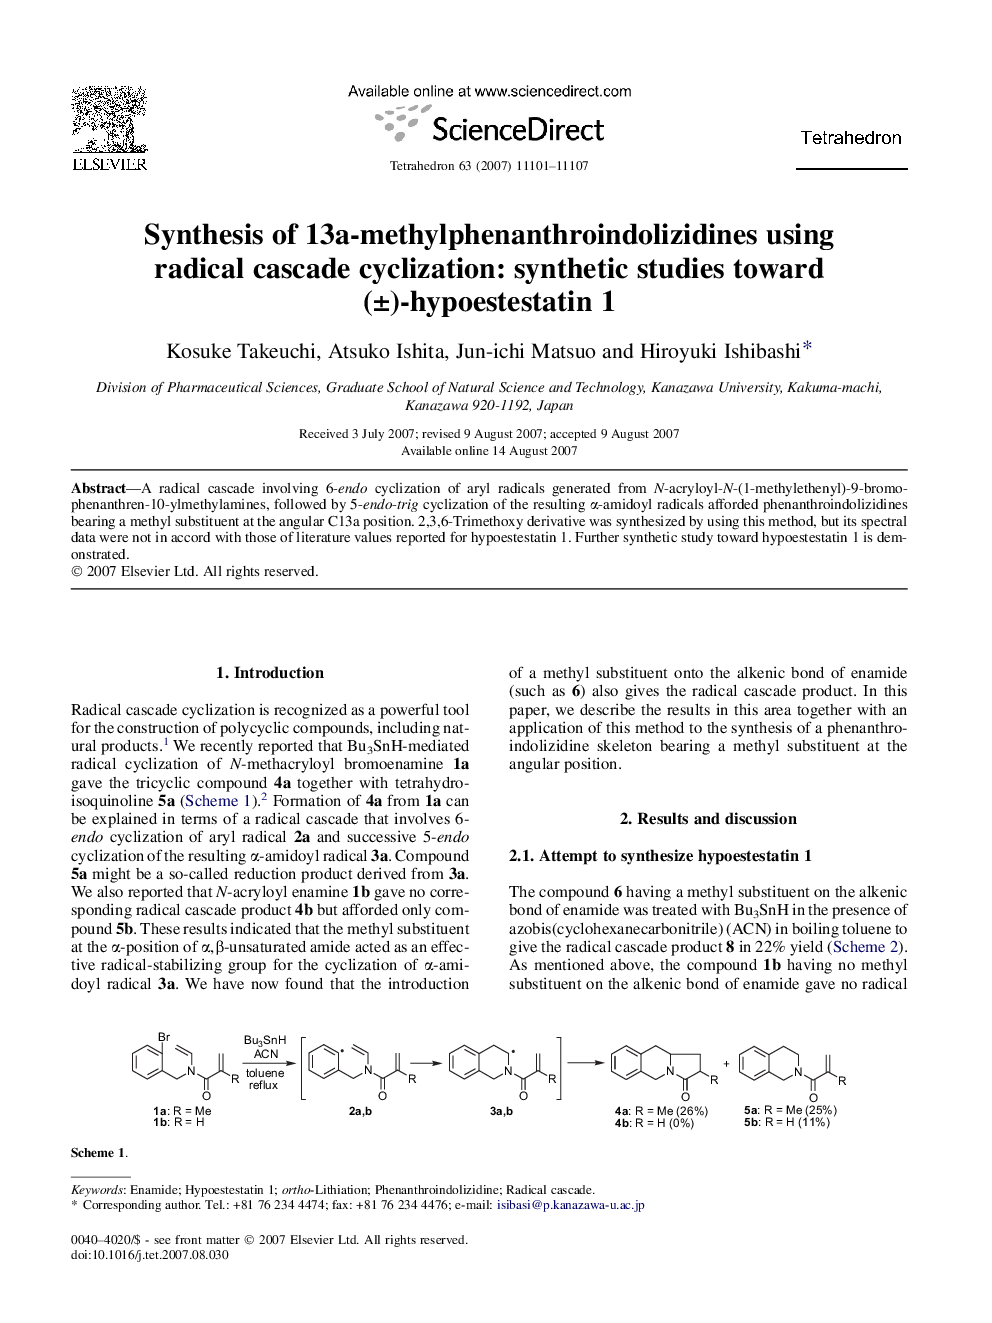 Synthesis of 13a-methylphenanthroindolizidines using radical cascade cyclization: synthetic studies toward (Â±)-hypoestestatin 1